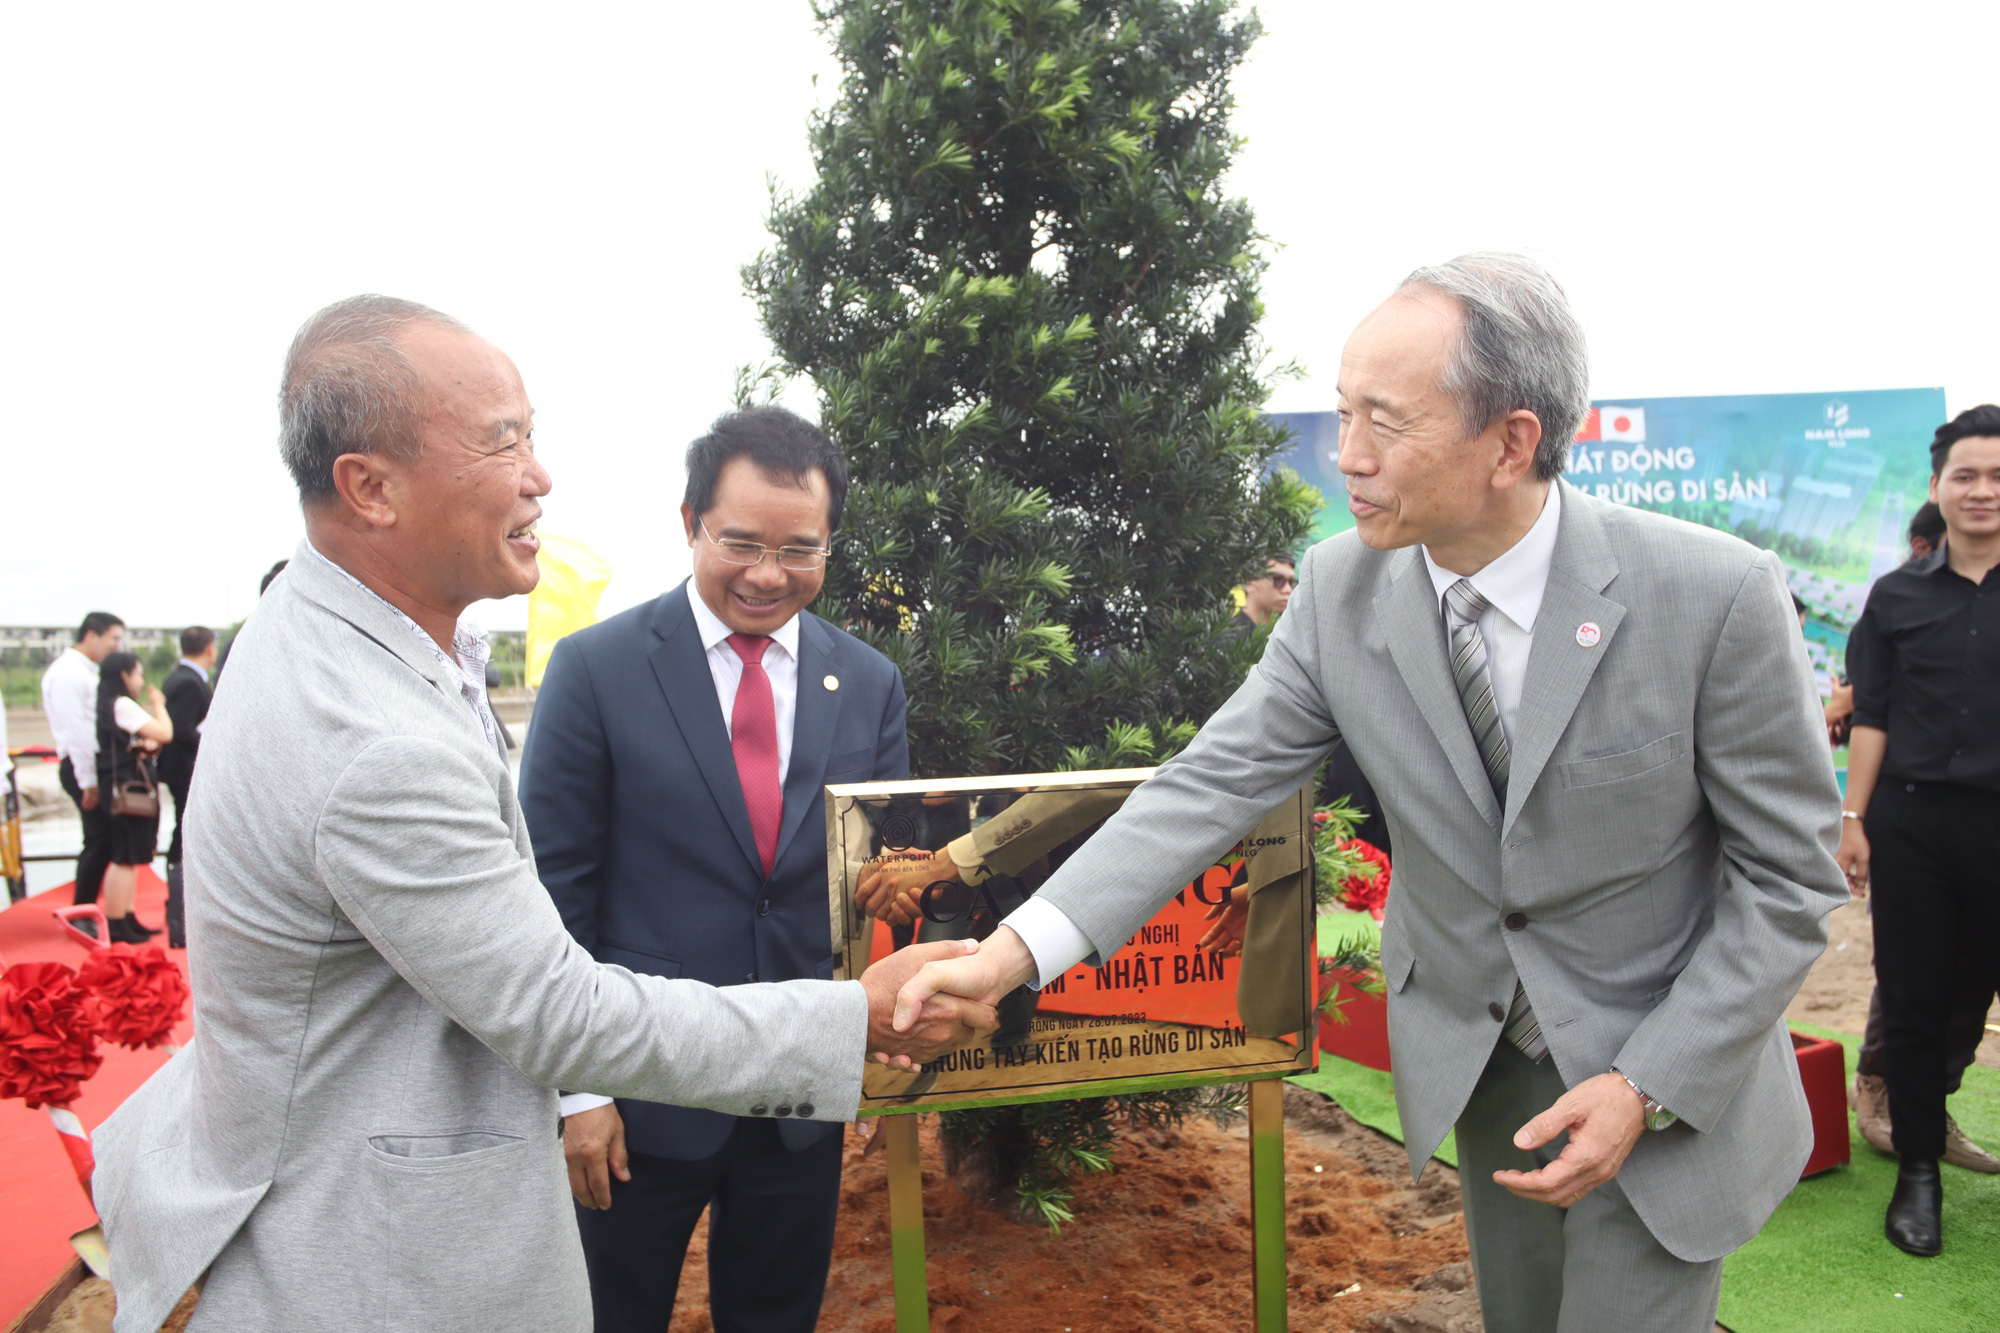 Construction of Vietnam-Japan friendship house commences in Long An